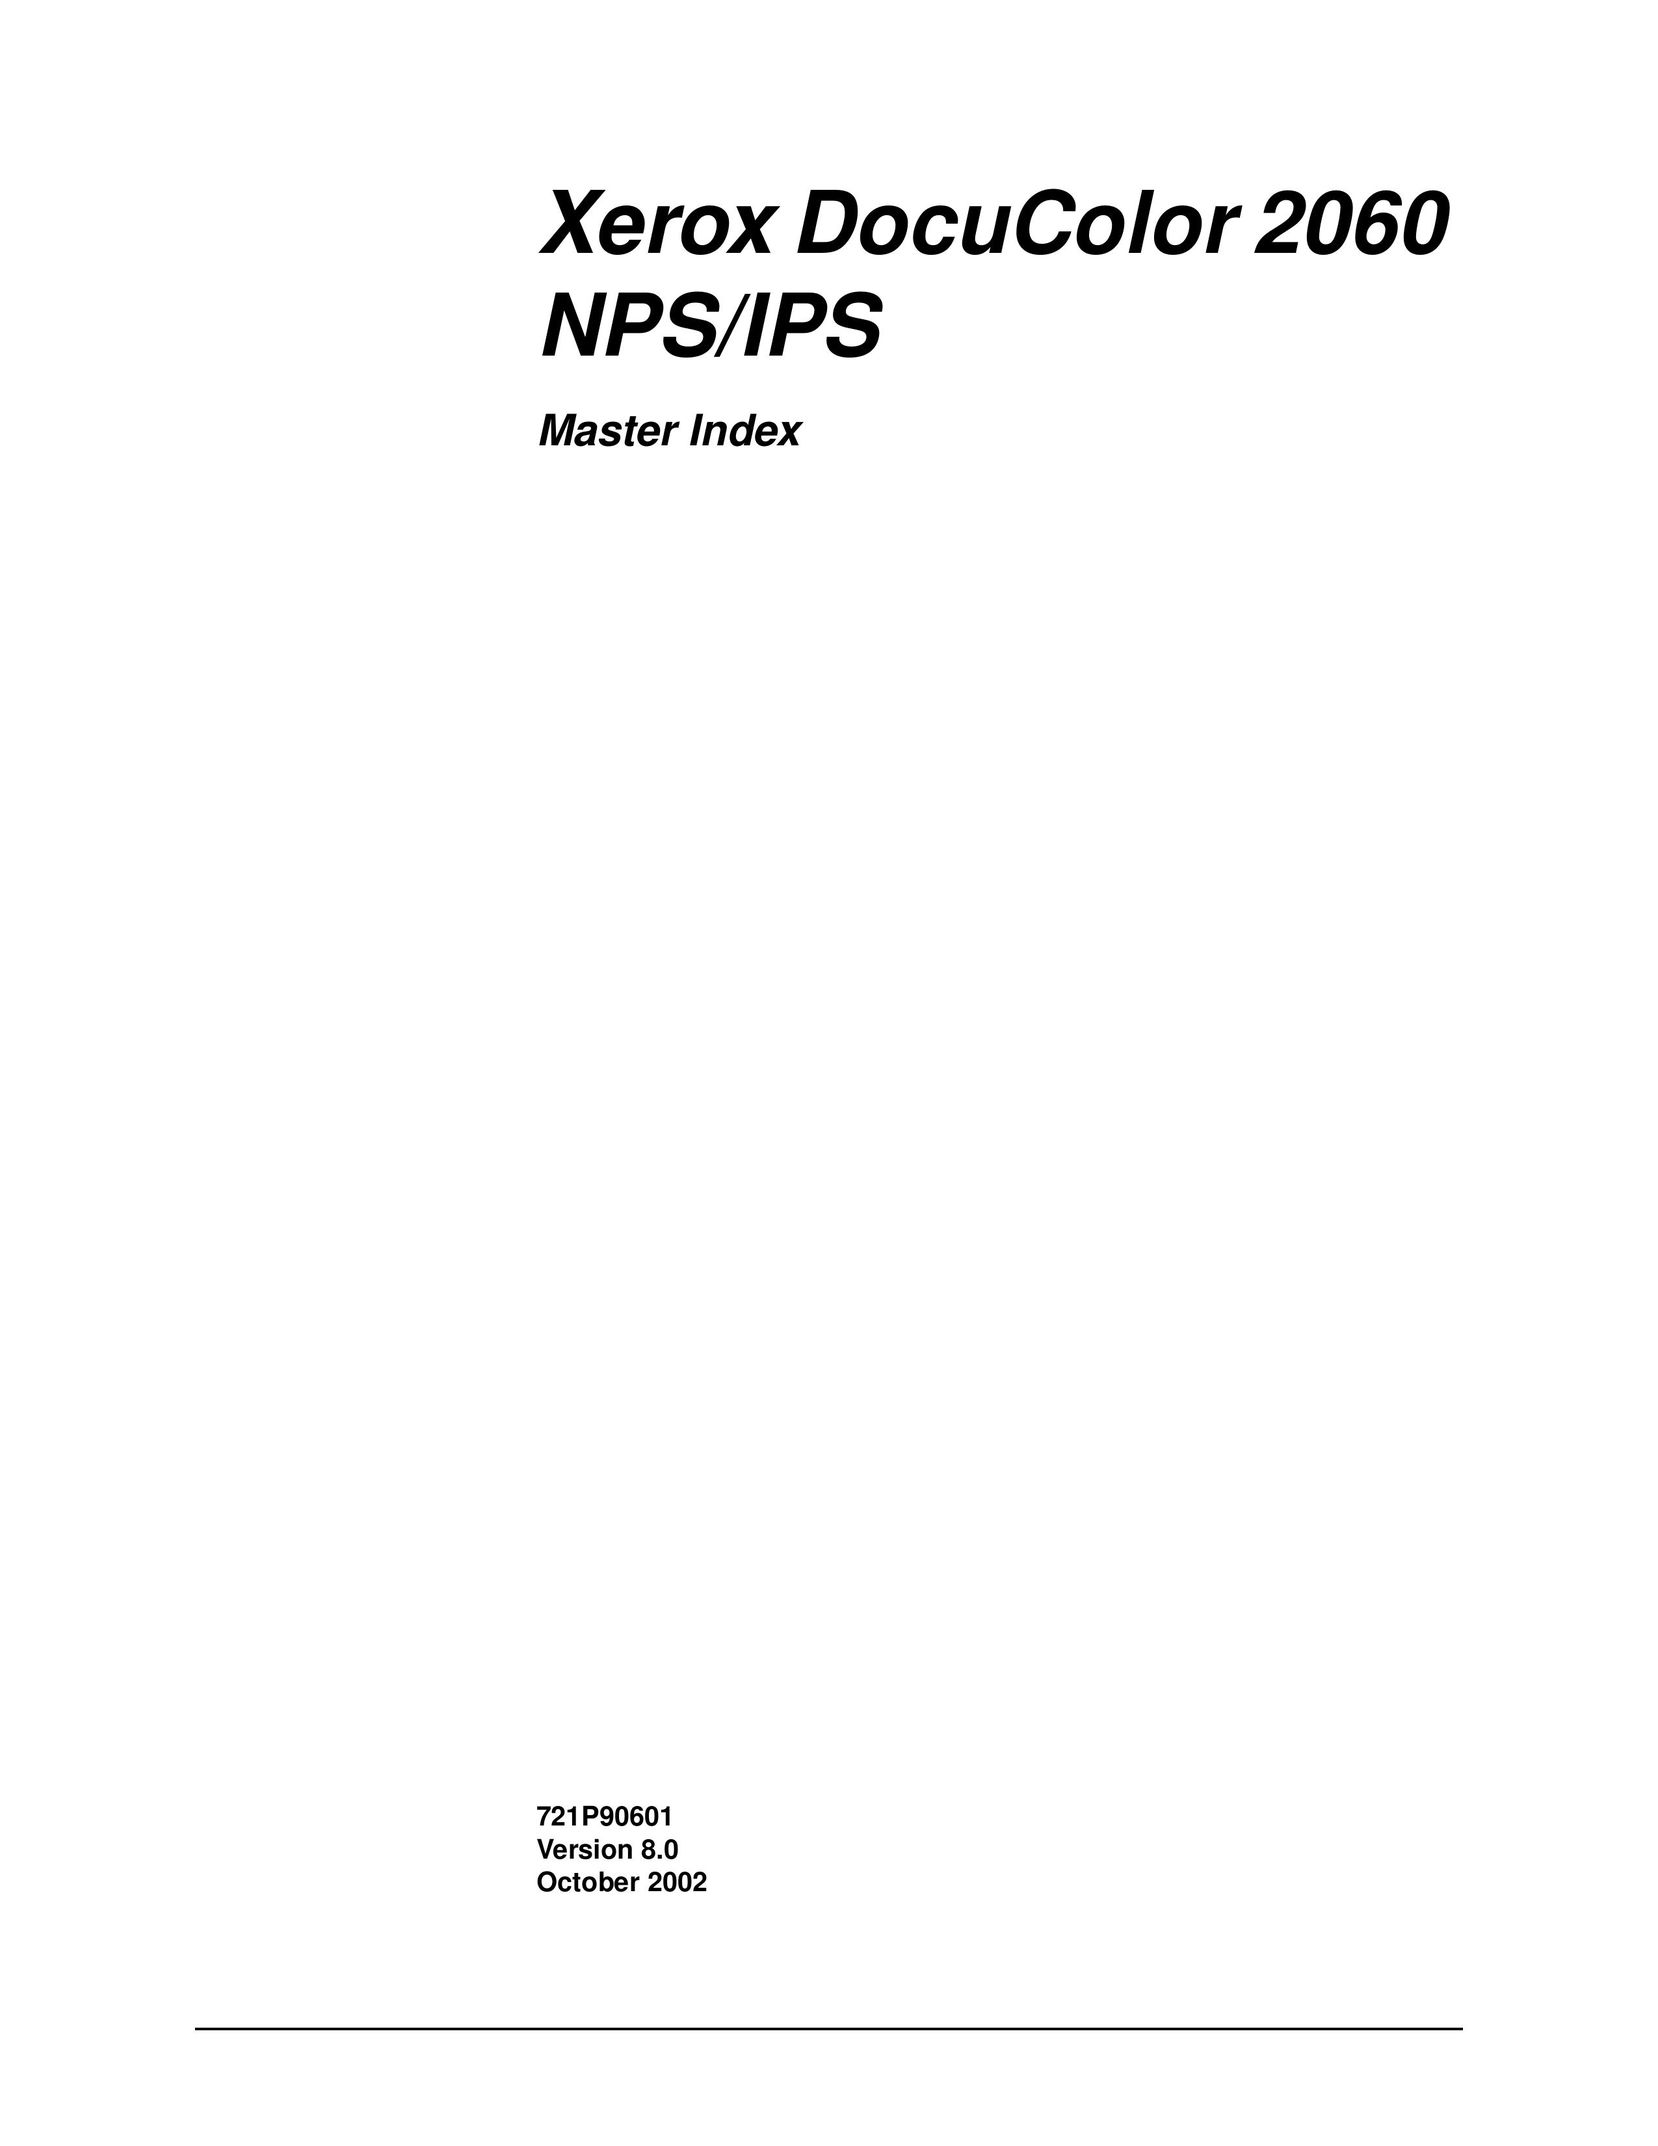 Xerox 2060 NPS Printer User Manual